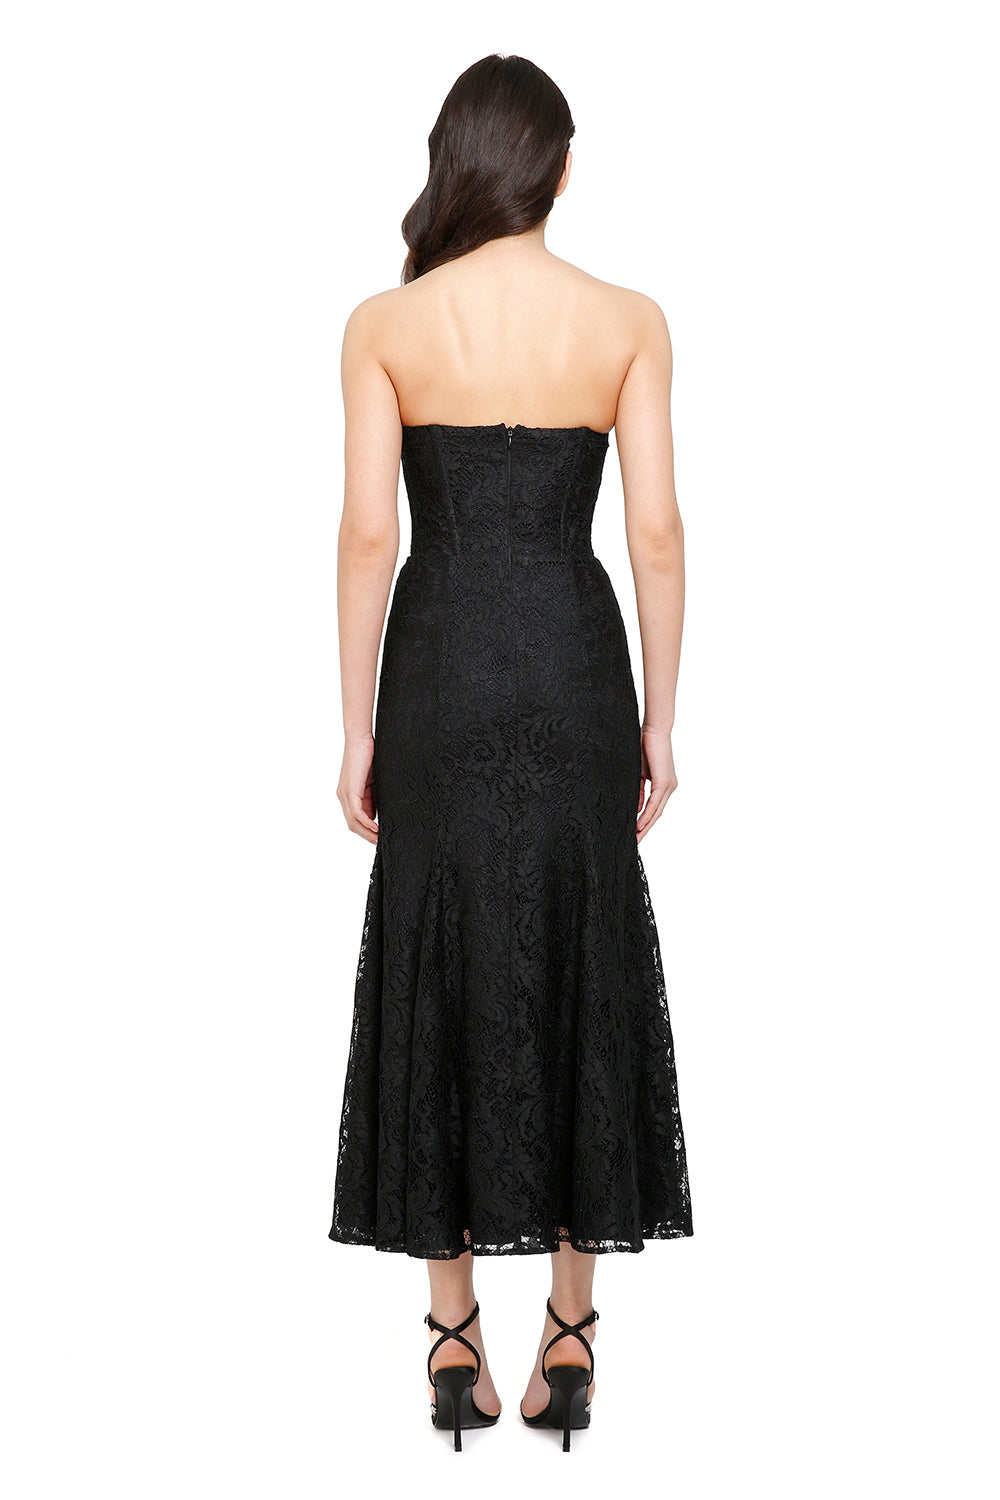 Vog Black Lace Corset Midi Dress